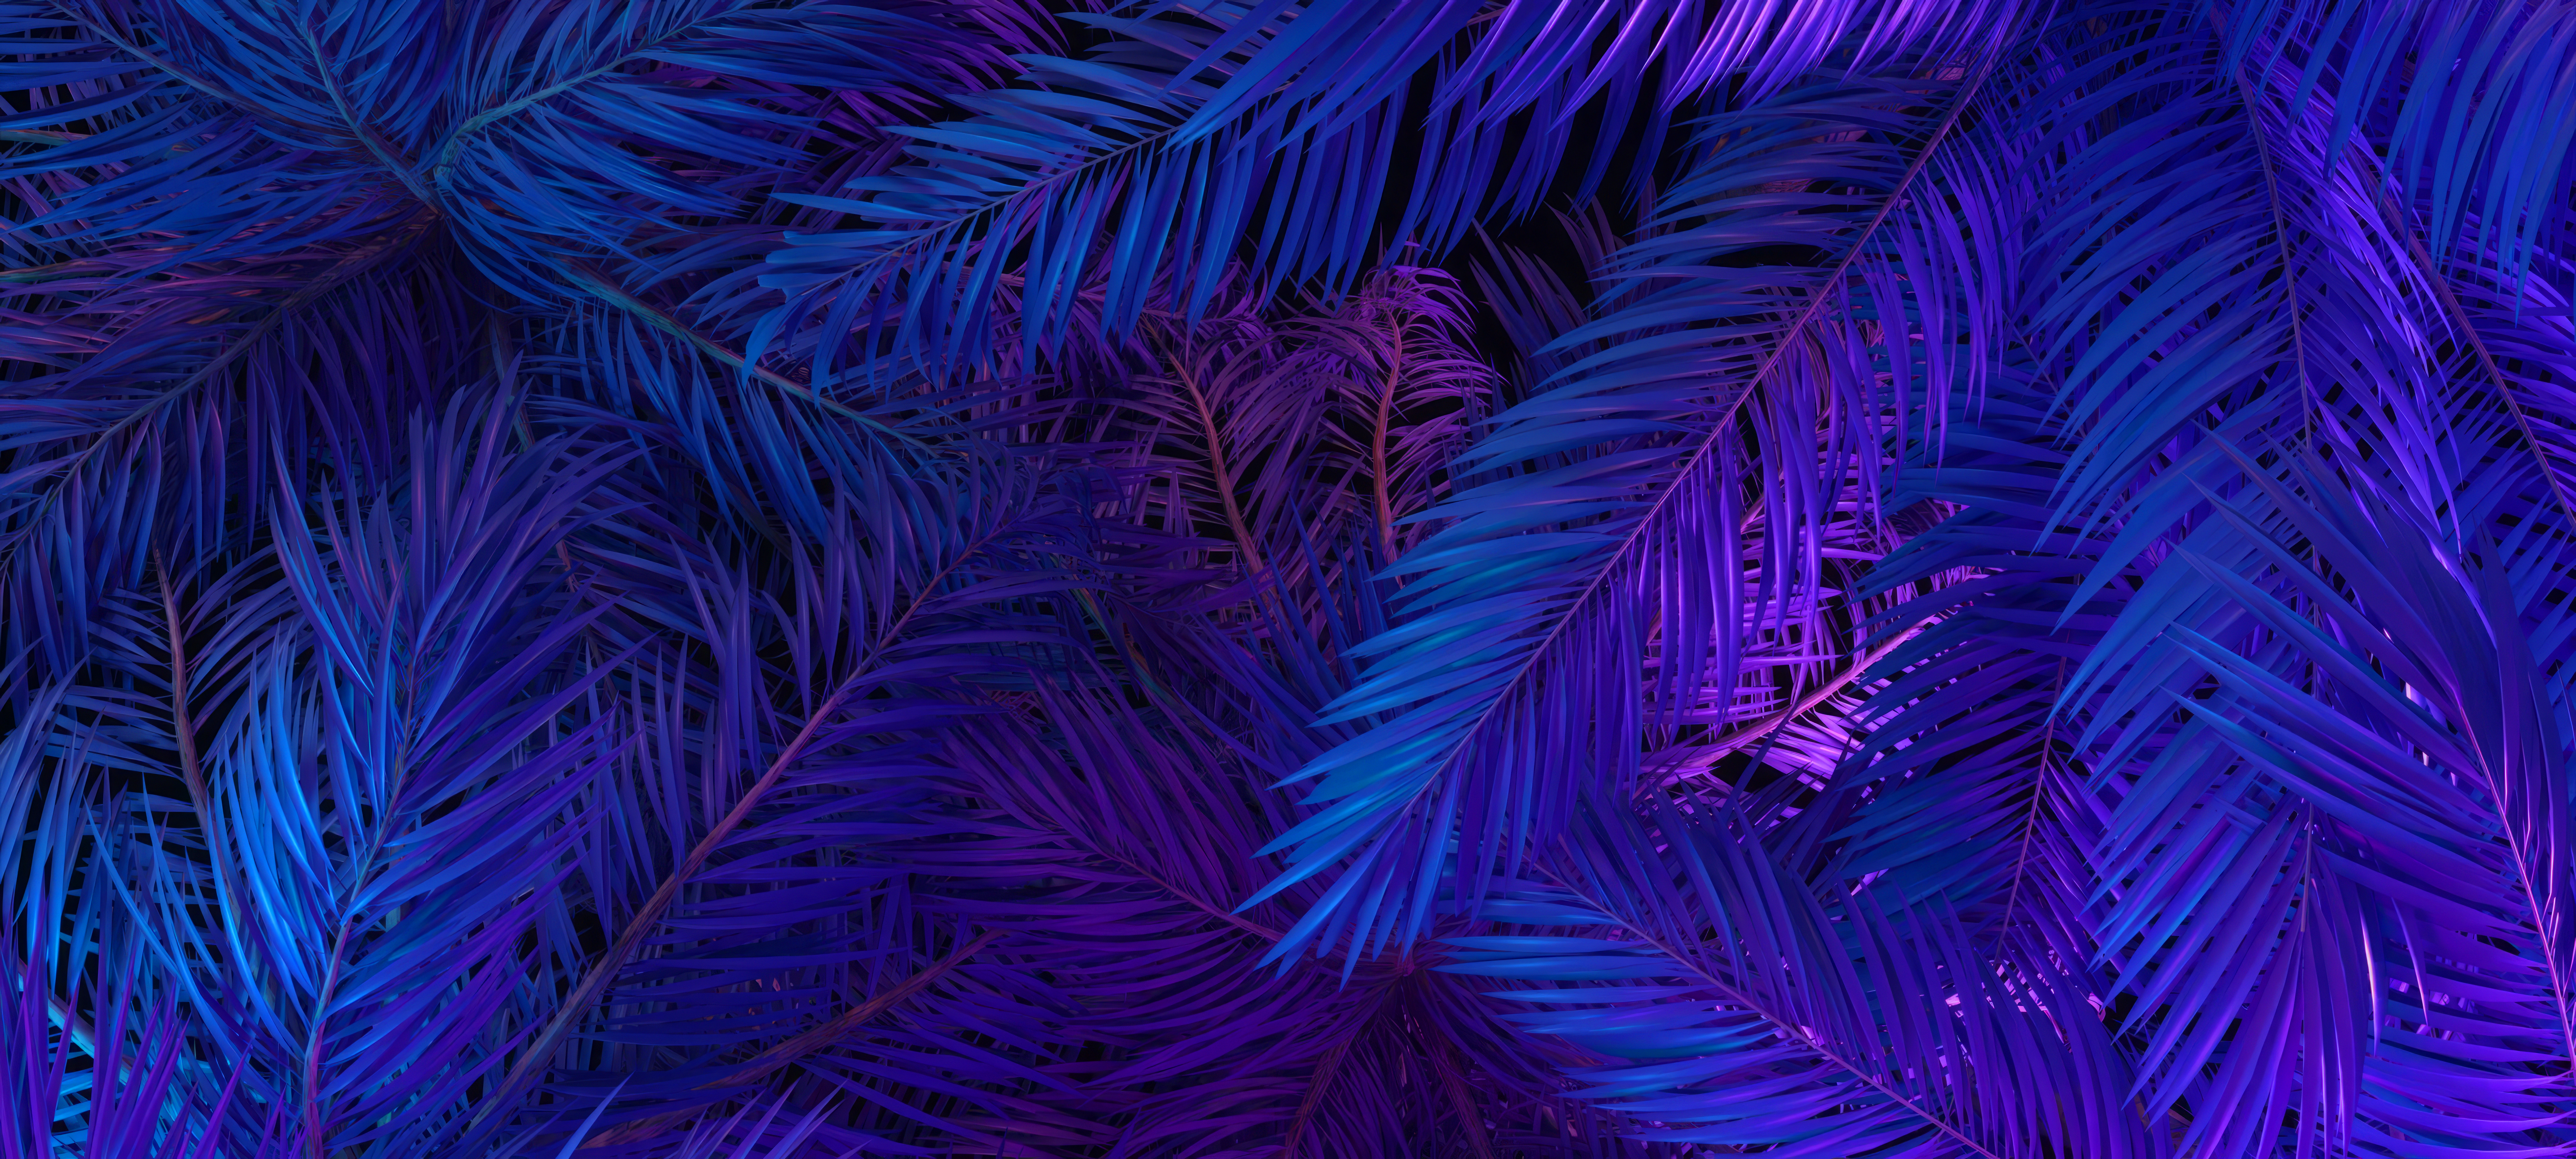 Ferns Neon Blue Bright Digital Art 7200x3240